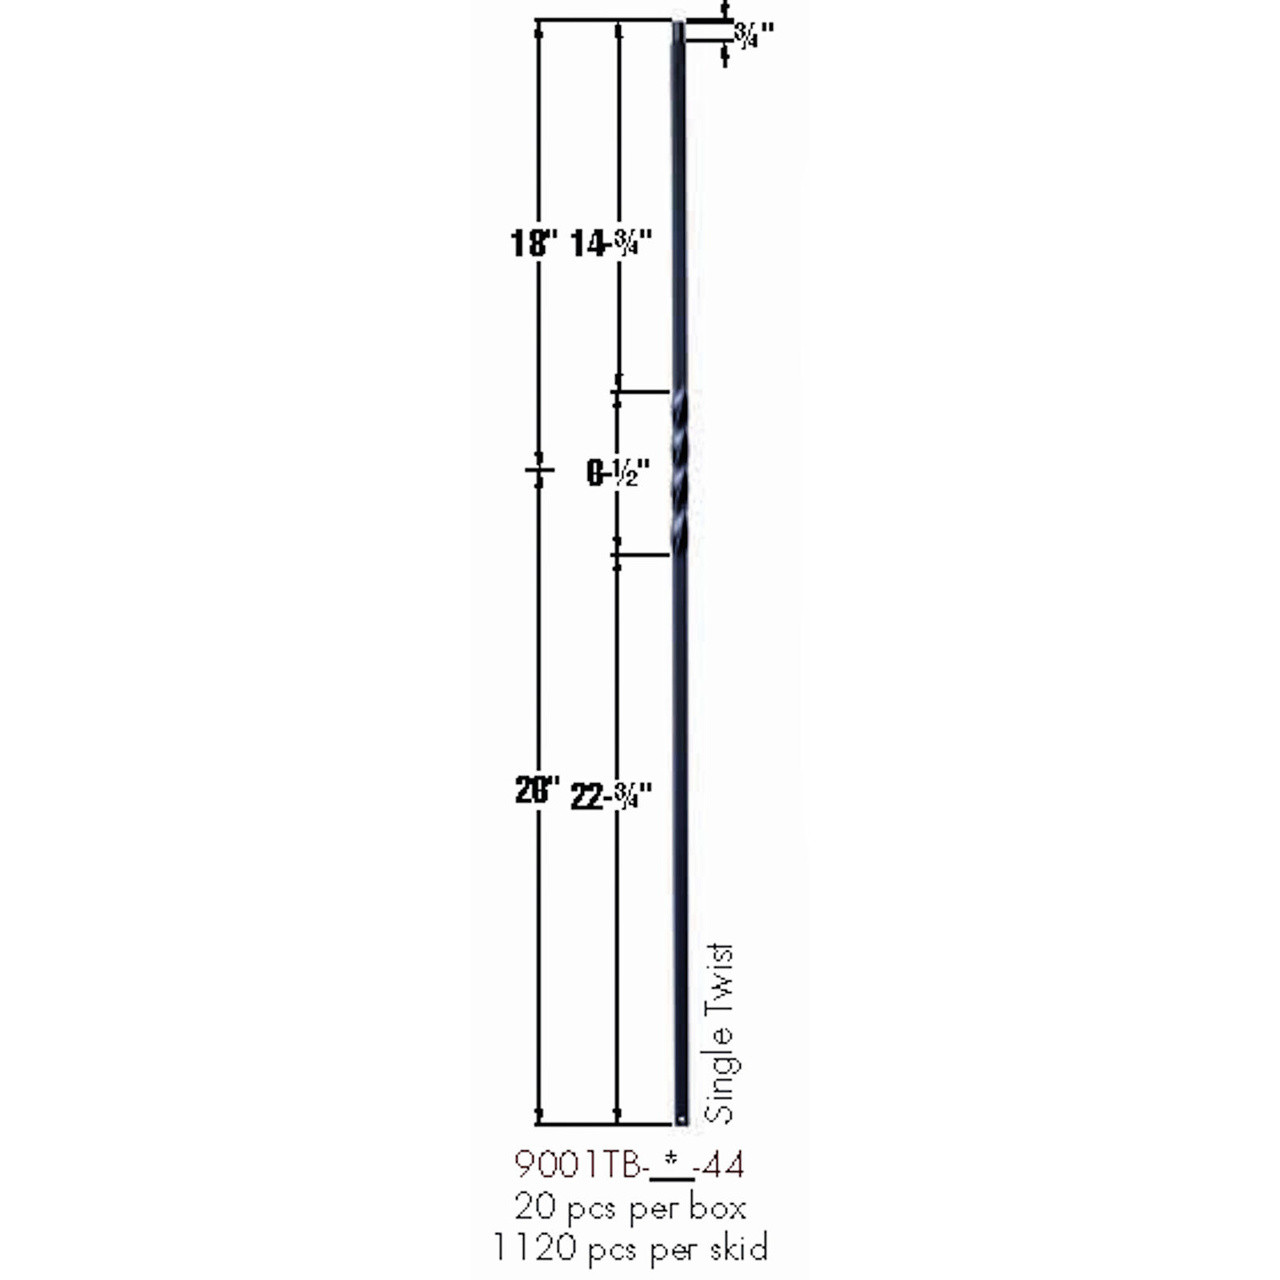 9001TB Single Twist Tubular Steel Baluster Dimensional Information